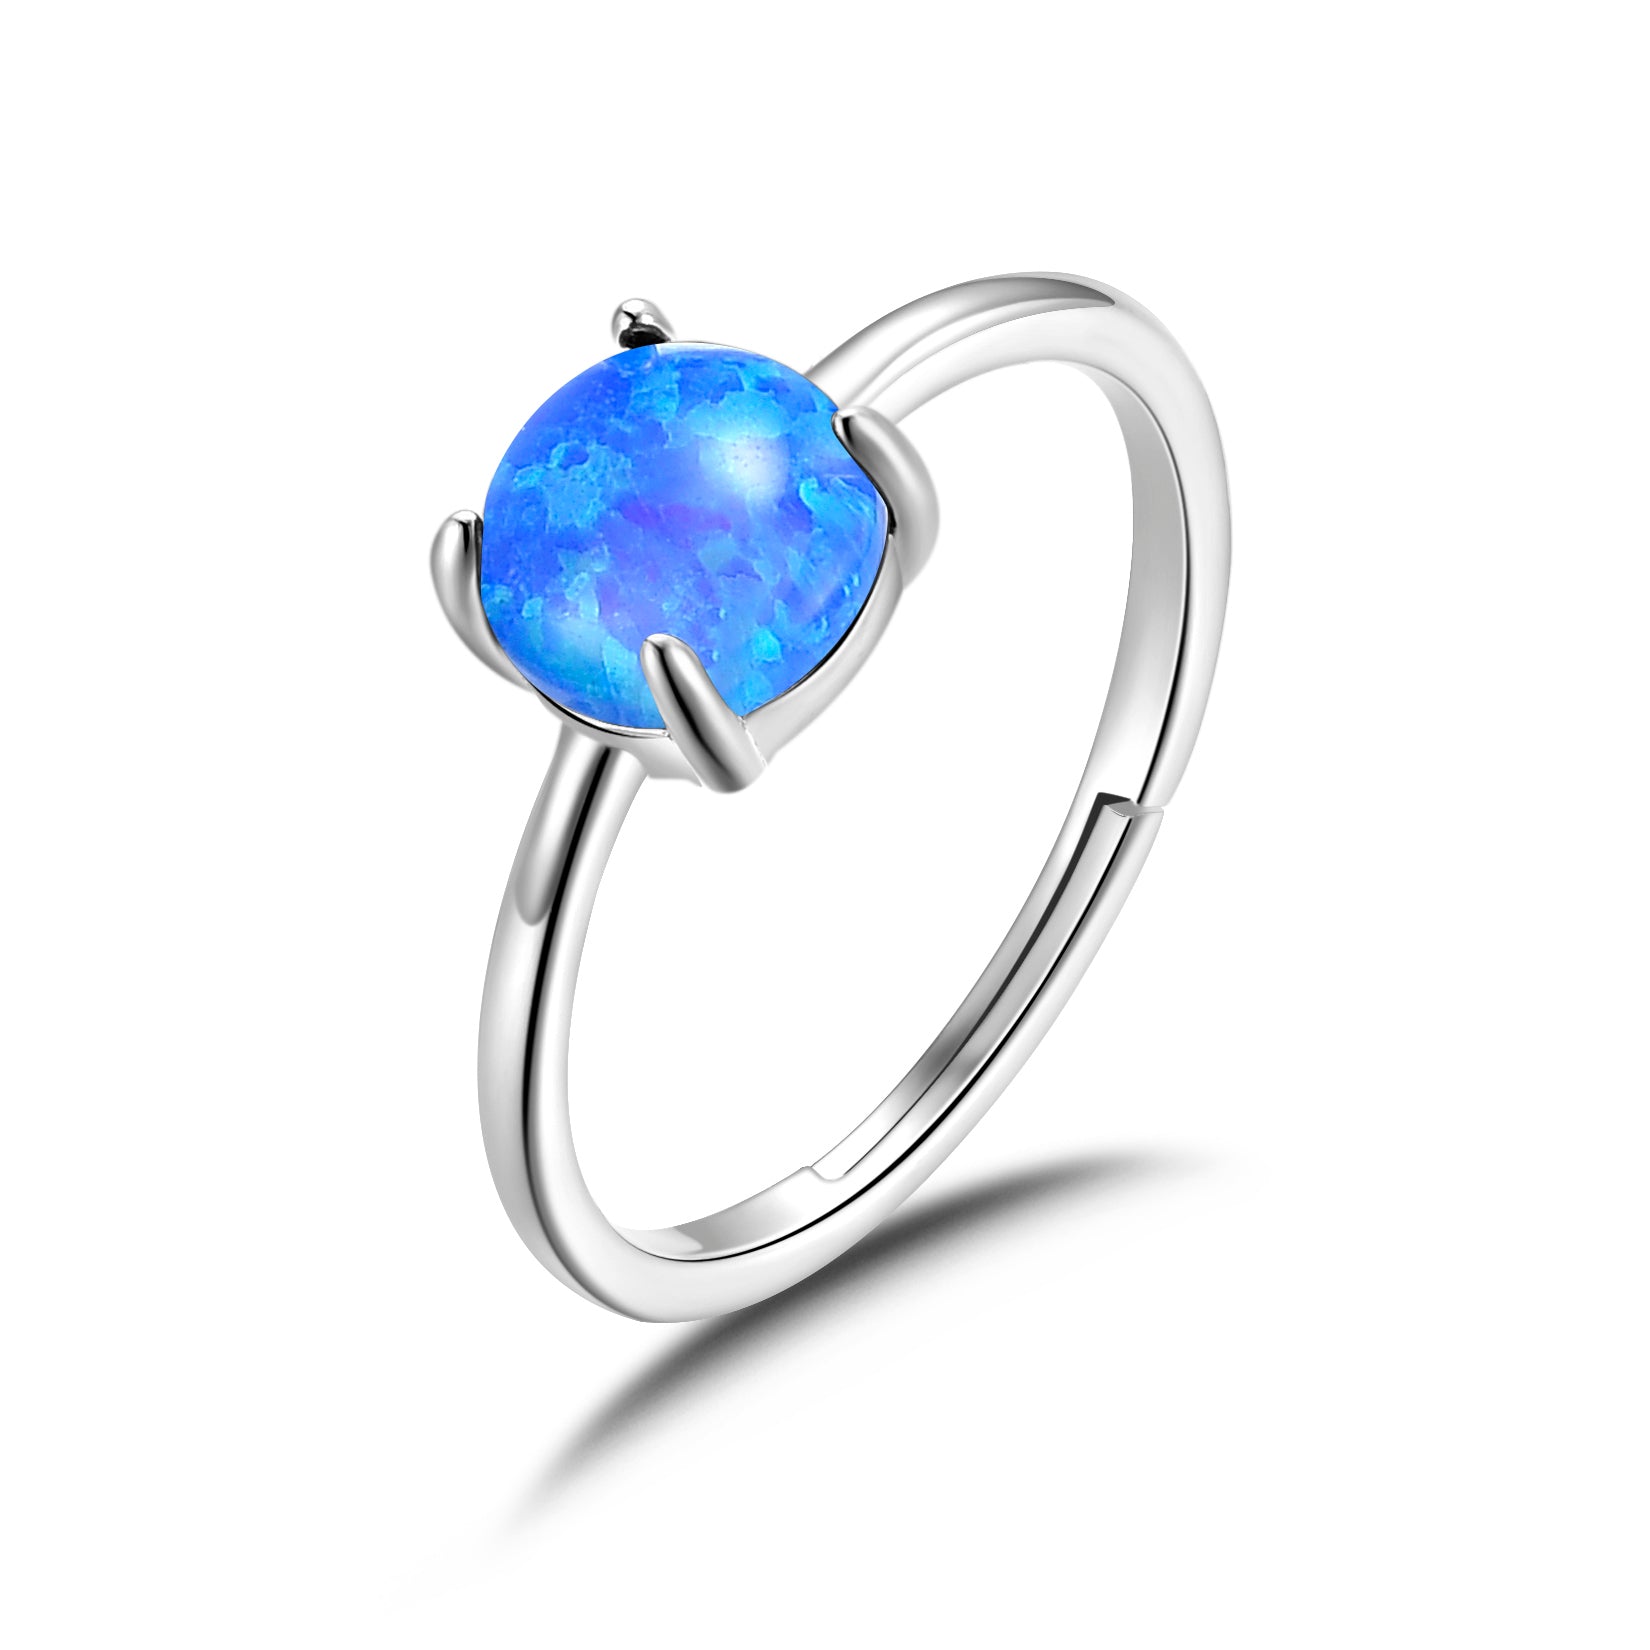 Synthetic Blue Opal Ring by Philip Jones Jewellery